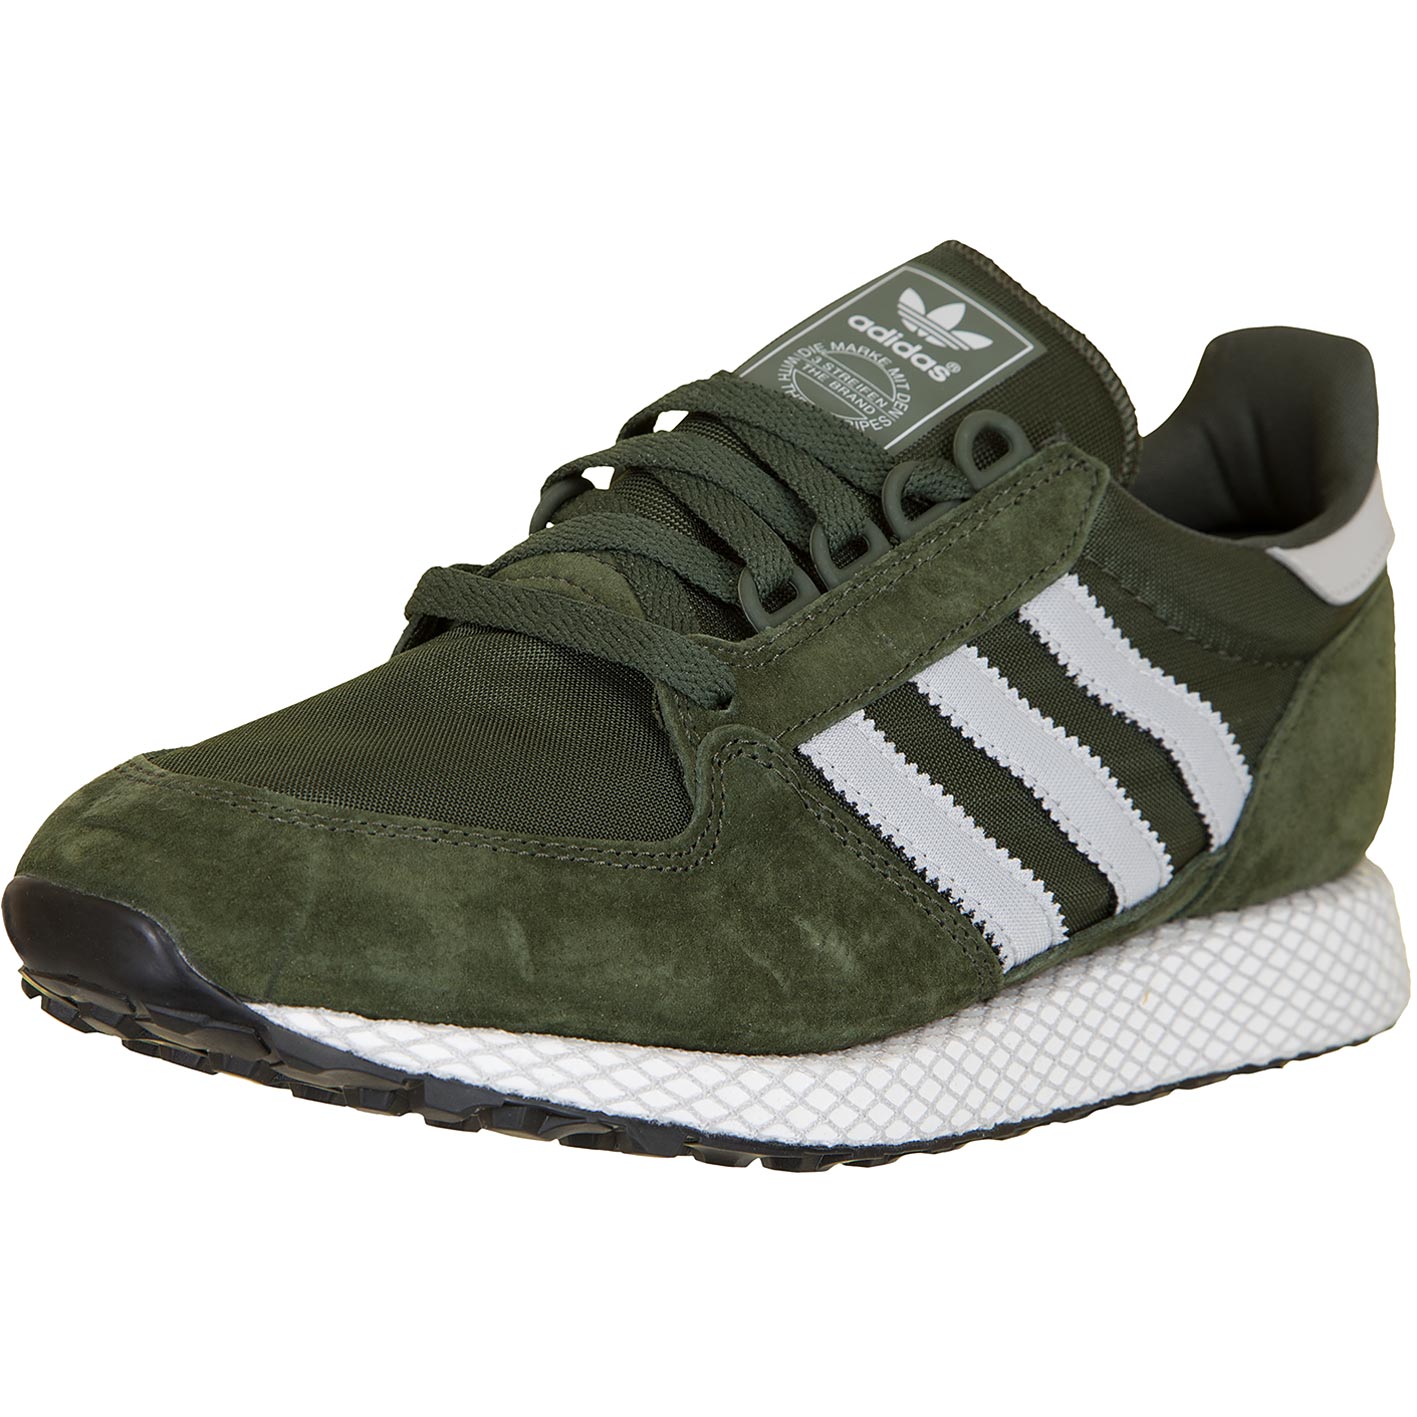 ☆ Adidas Originals Sneaker Forest Grove oliv/grau - hier bestellen!